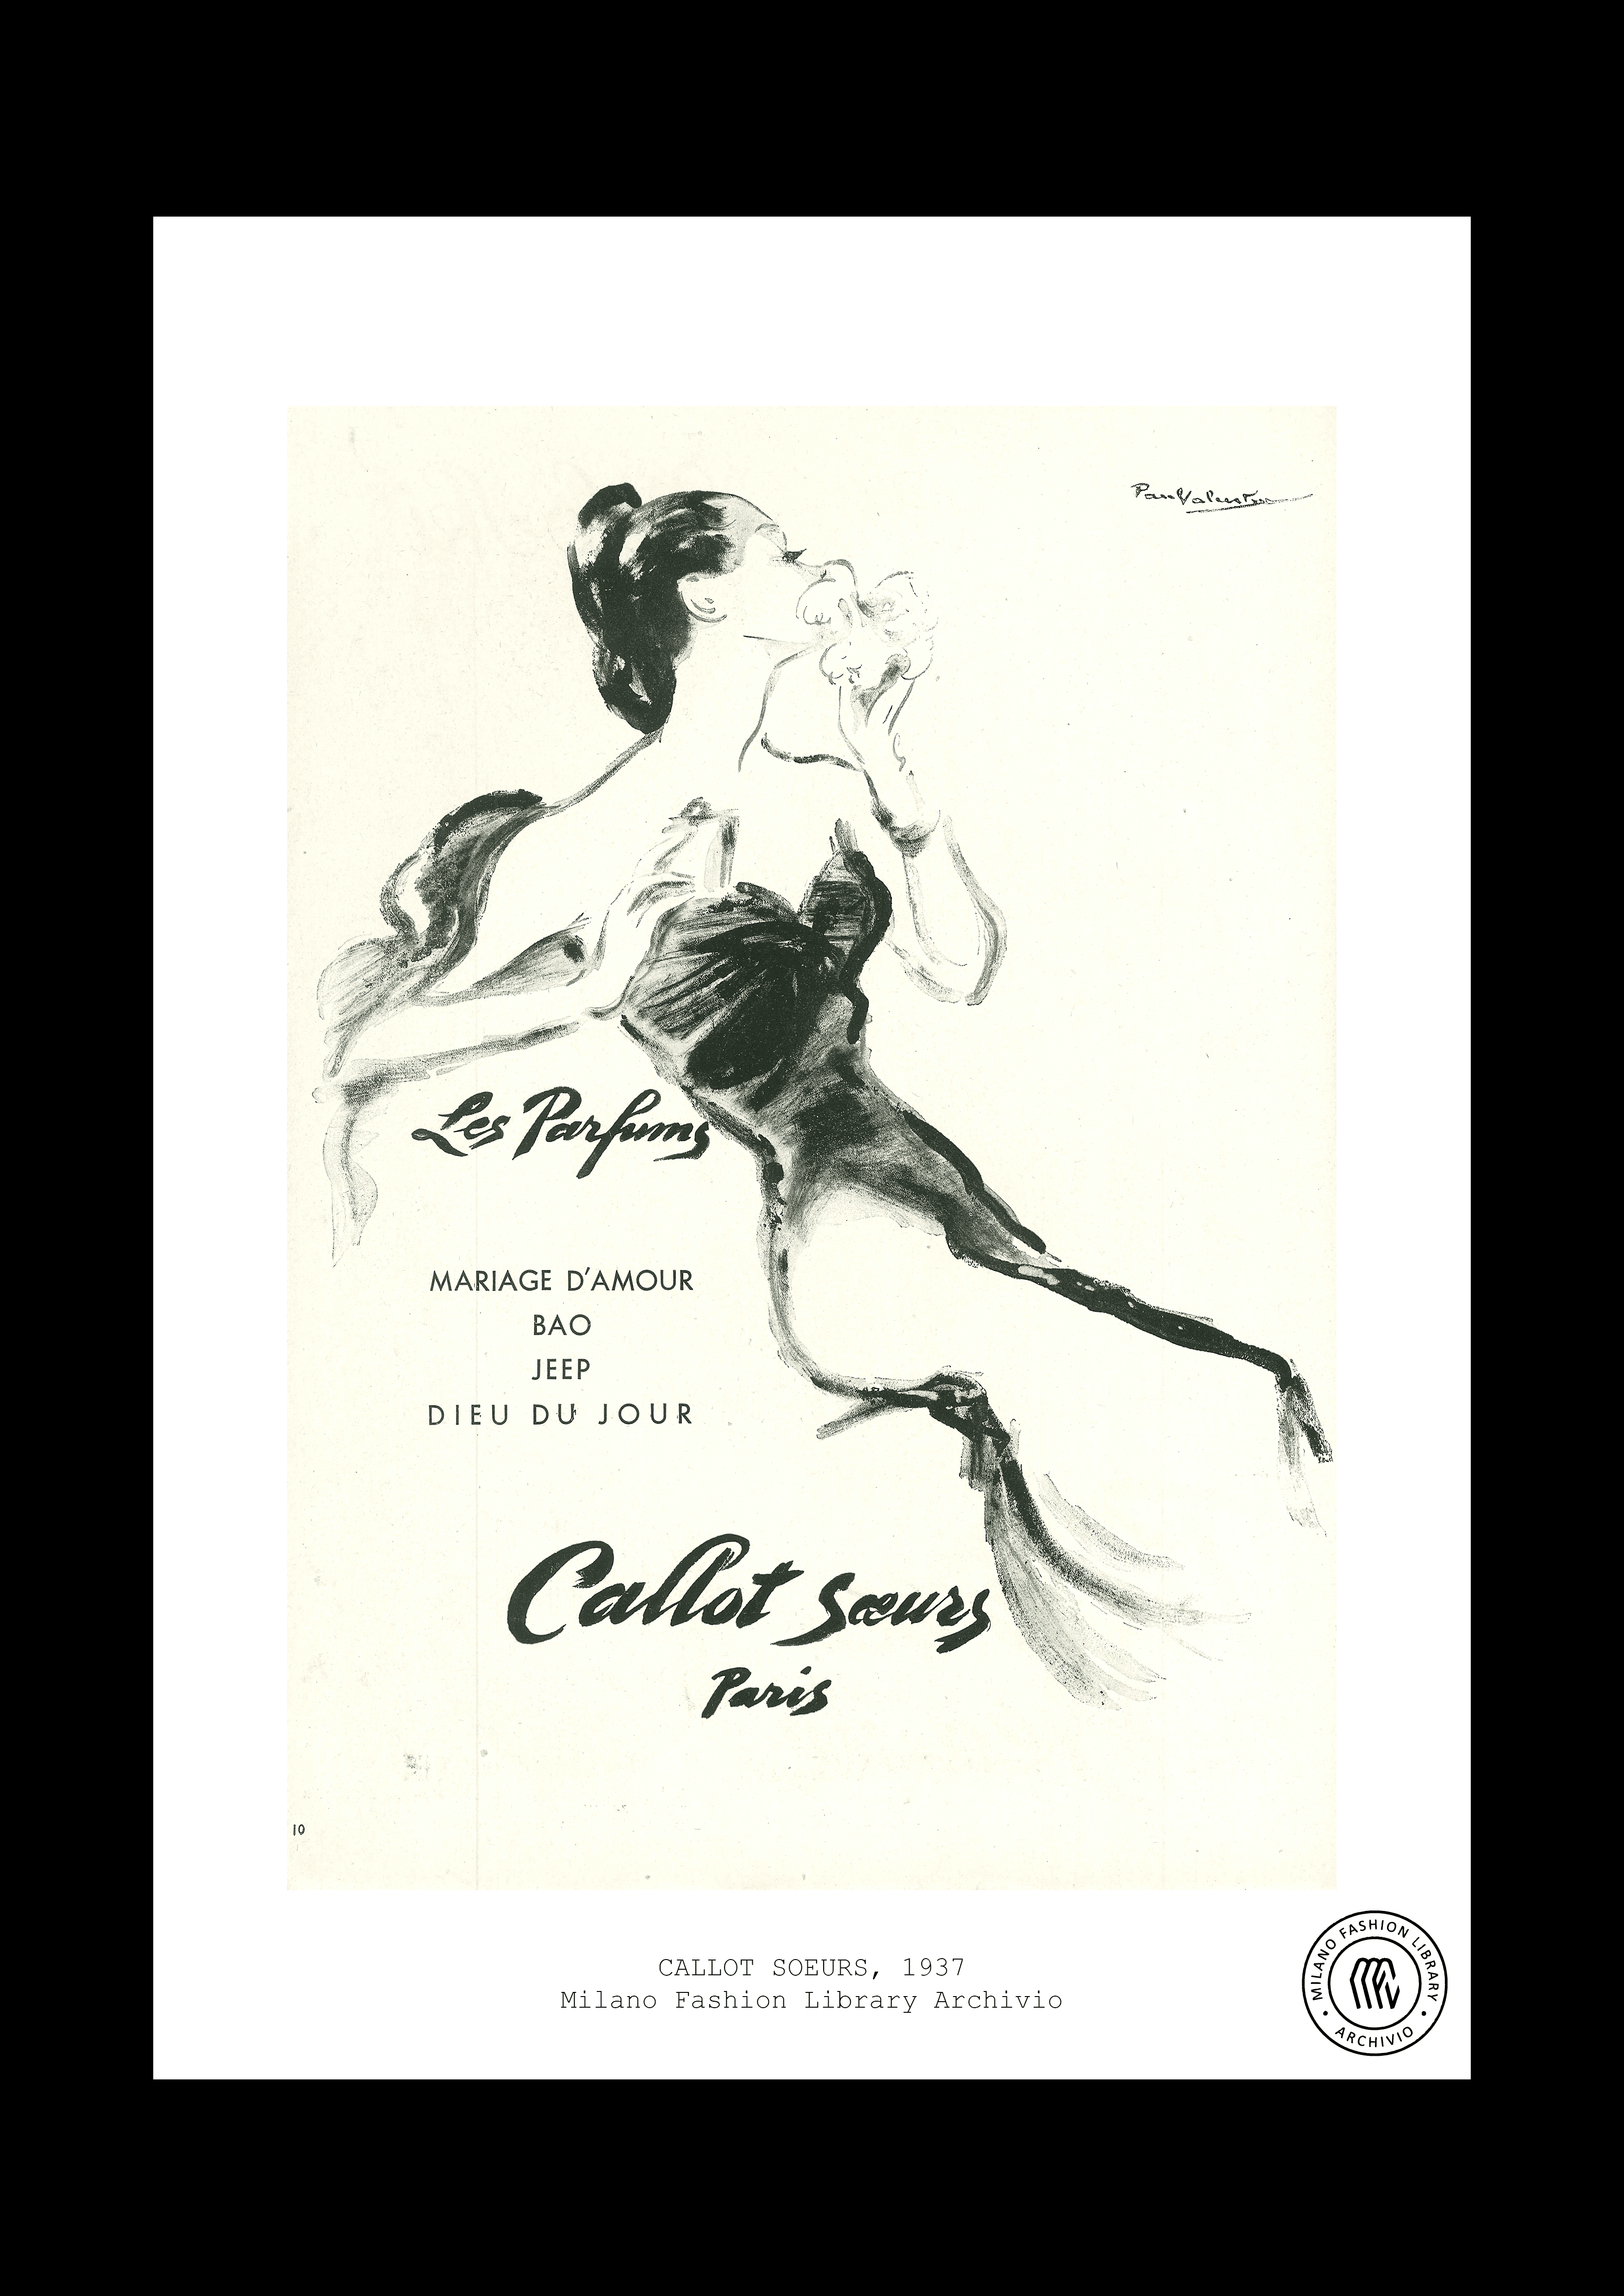 Callot Soeurs 1937-Milano Fashion Library Archivio